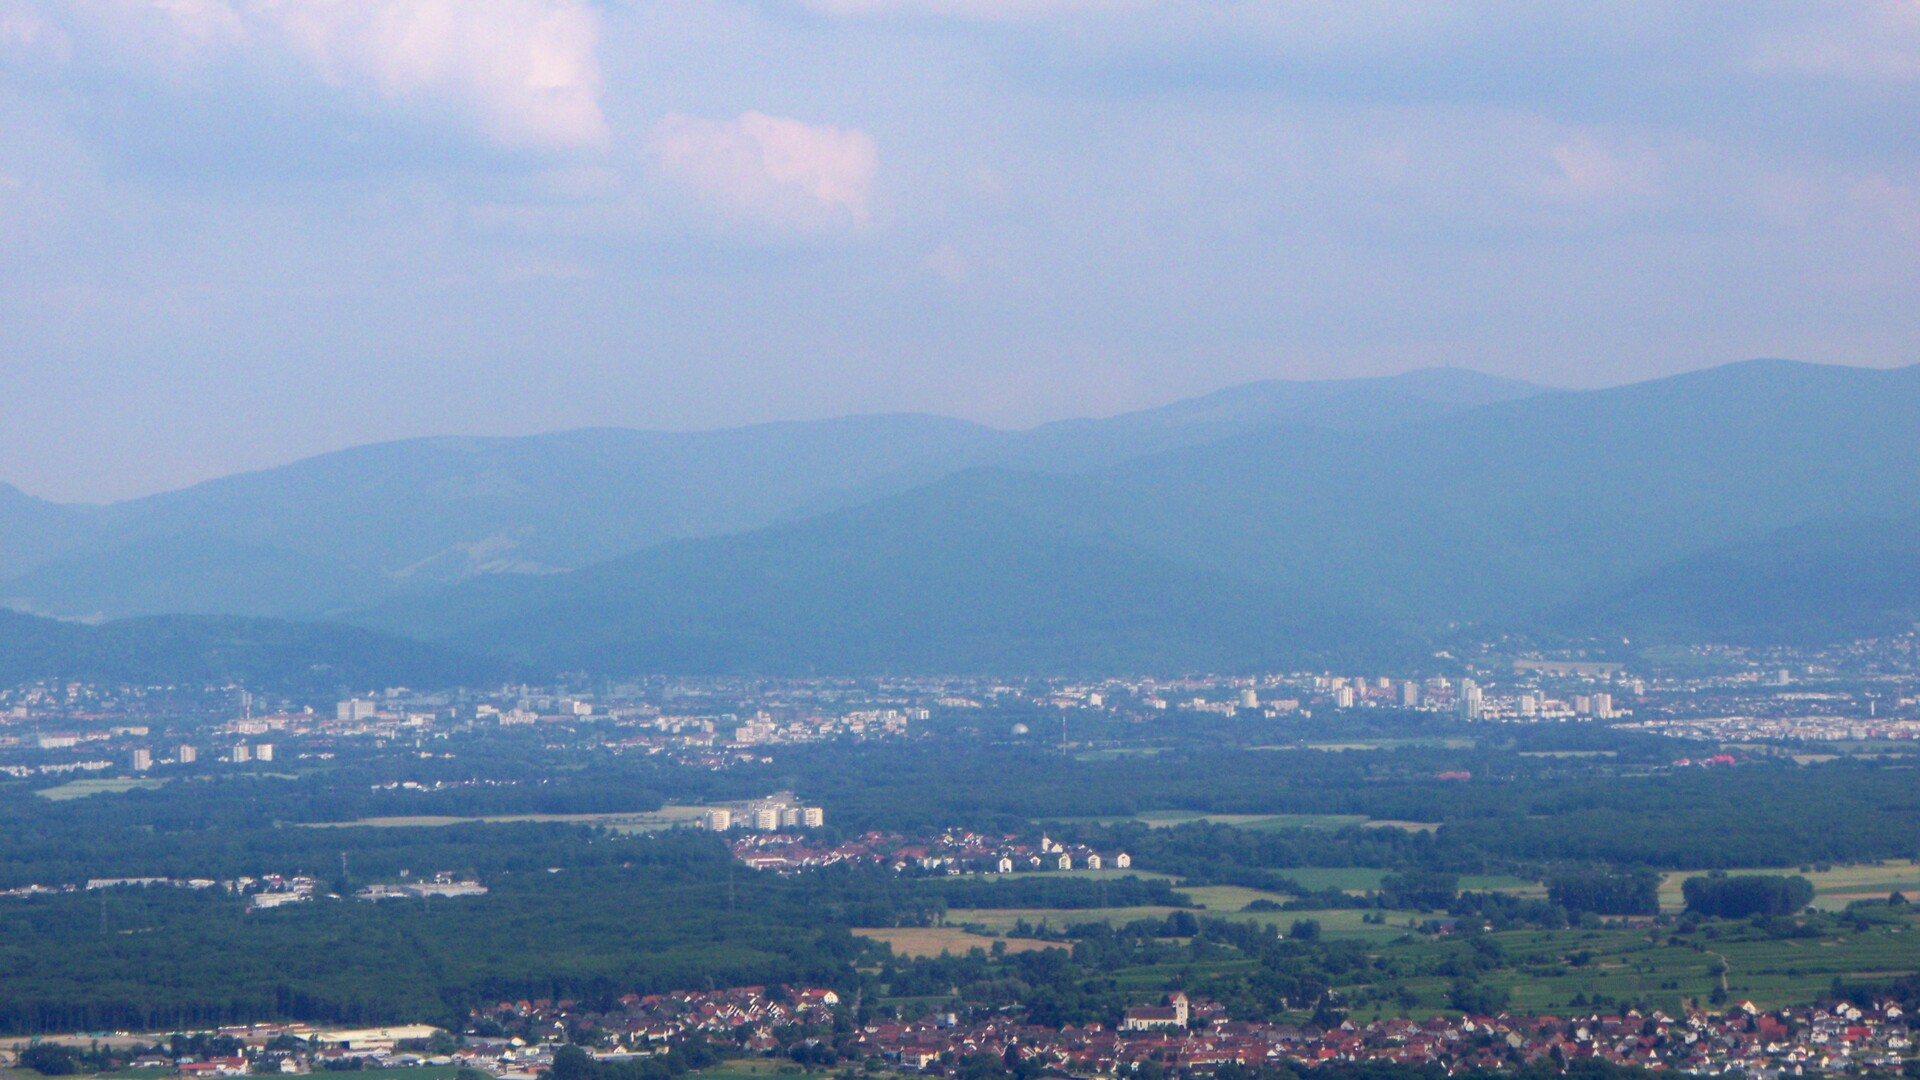 Freiburg mit Feldberg (1493m) am Horizont